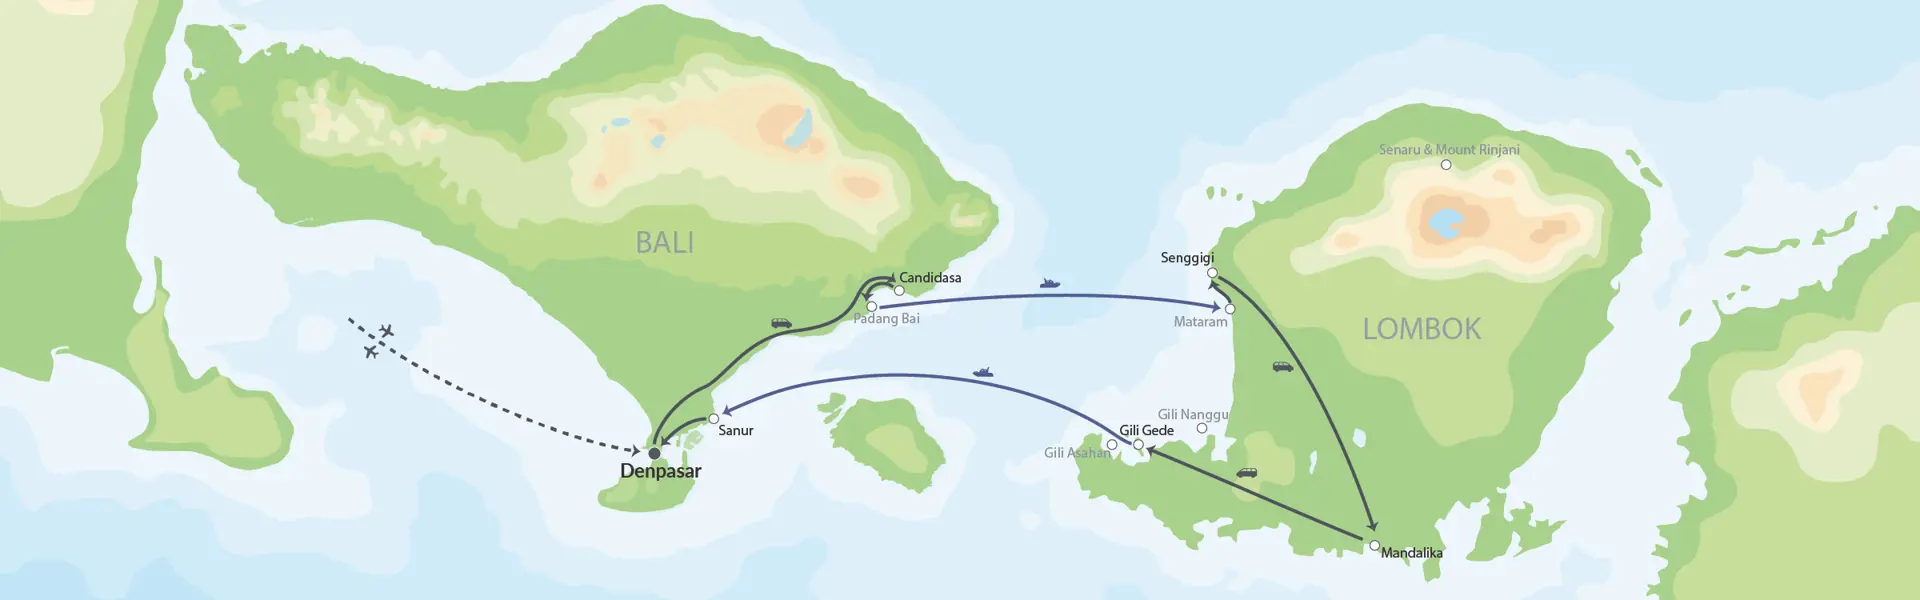 DK Bali, Lombok & Gili Gede Map